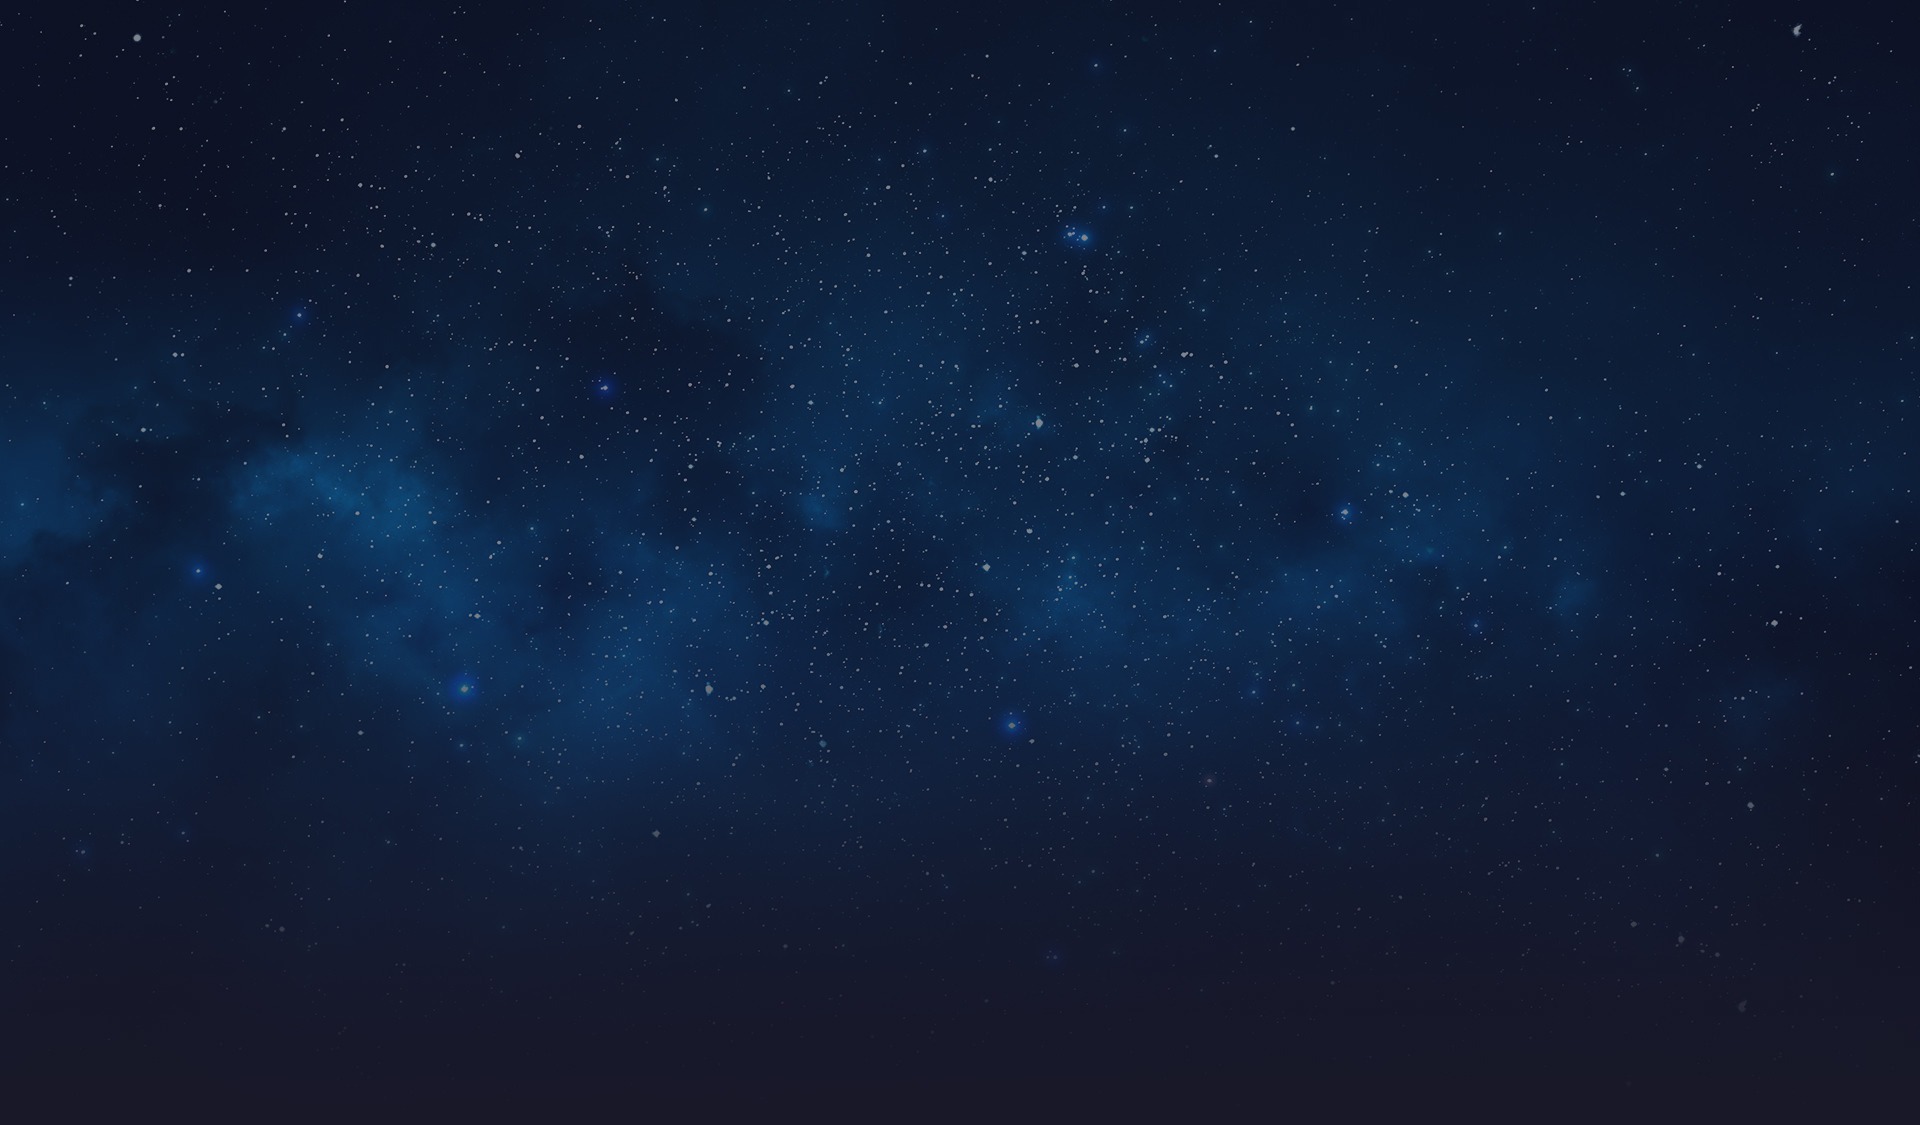 Blue Night Sky With Stars For Website Background Image Digi